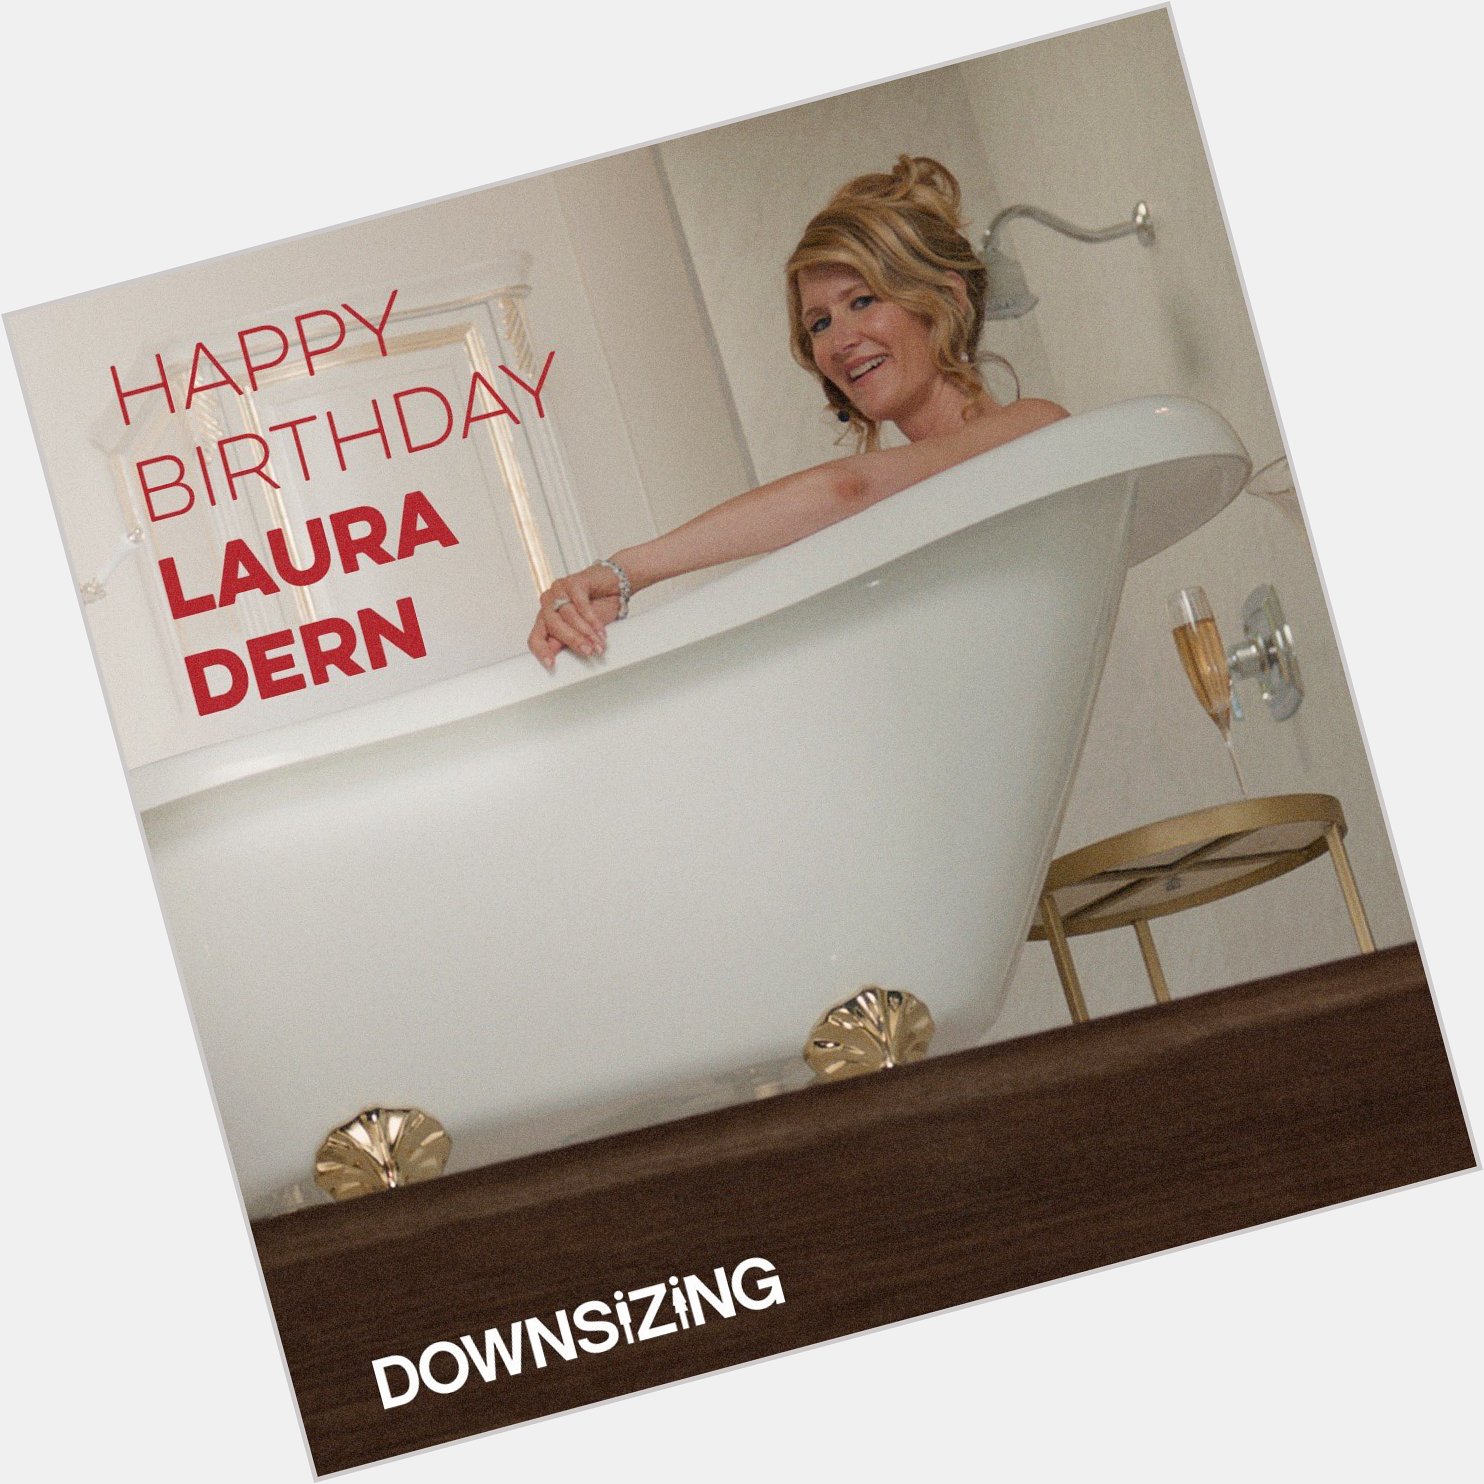 Happy Birthday to Laura Dern, the first lady of Leisureland 